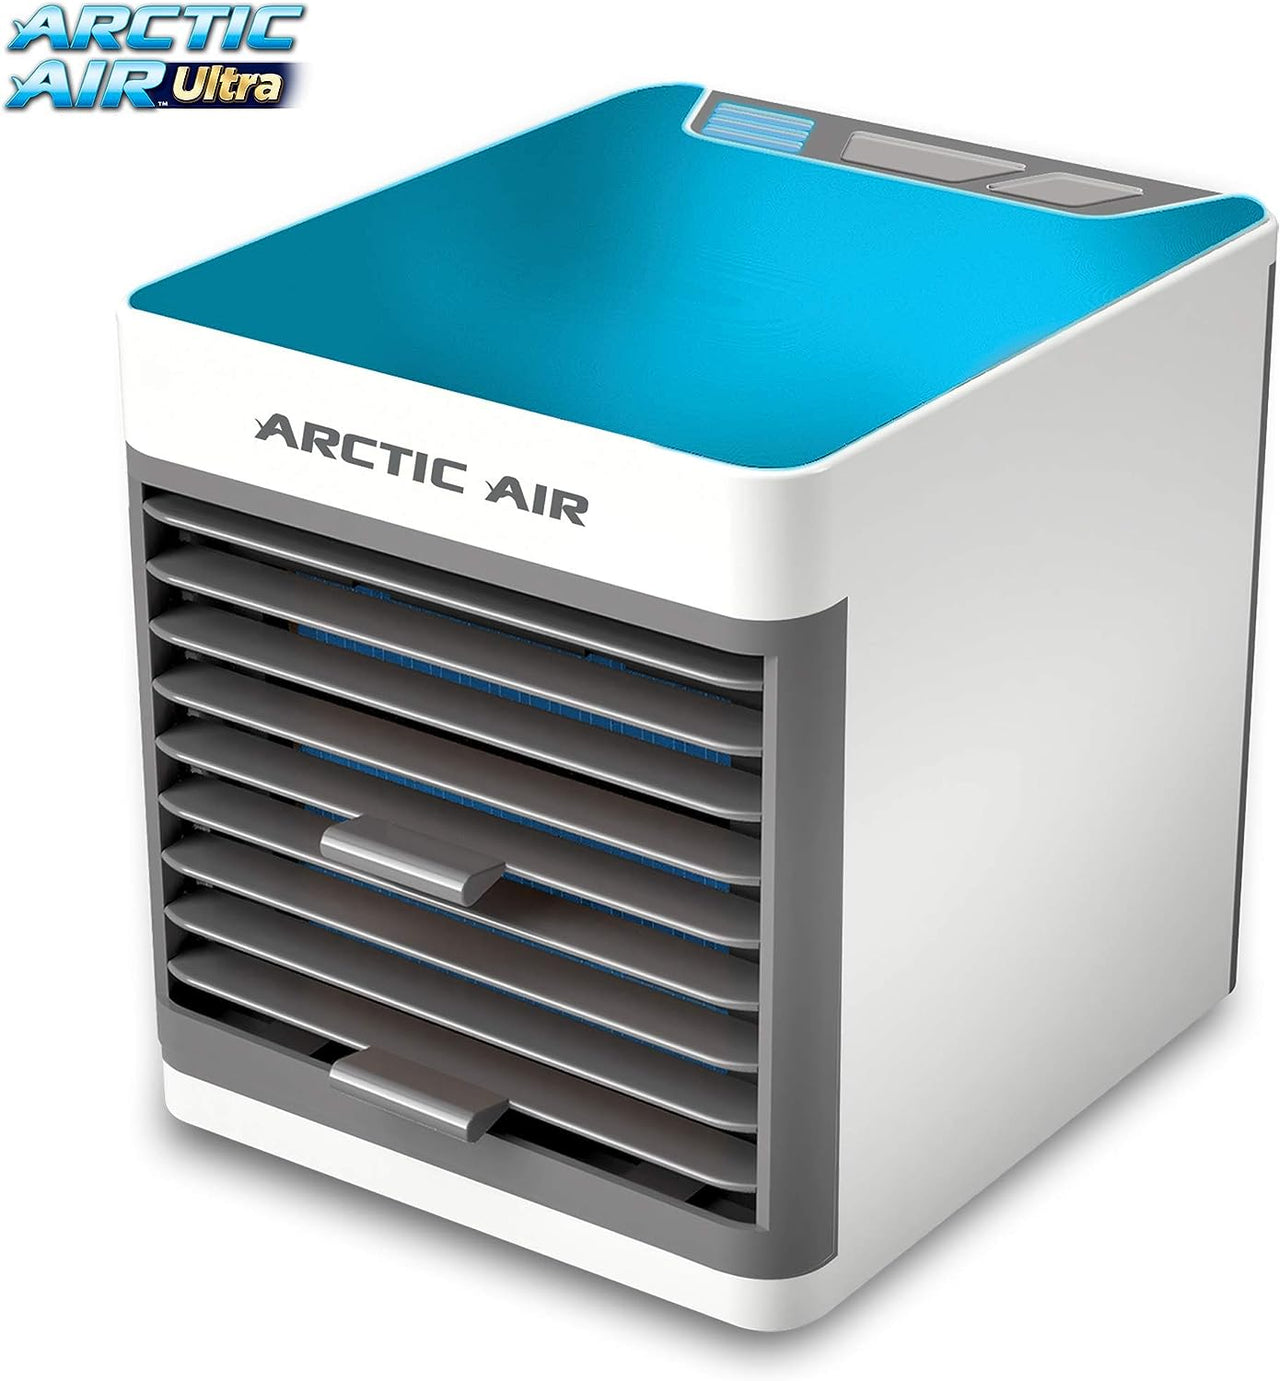 Arctic Ultra Evaporation Air Cooler